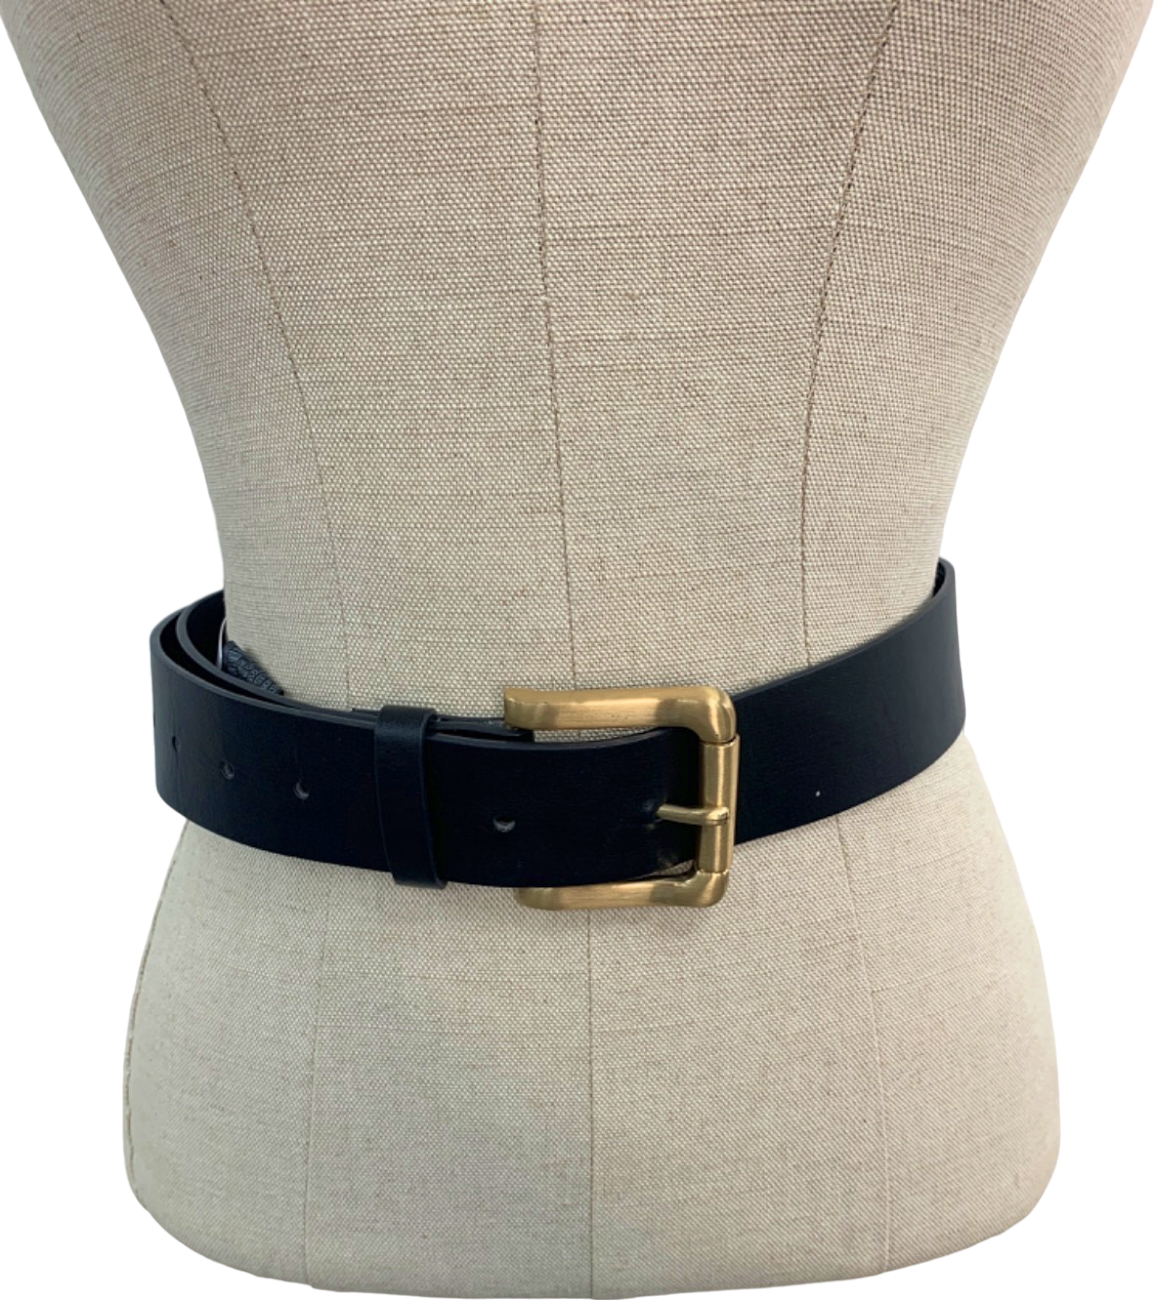 Zara Black Leather Belt Gold Buckle Size 80